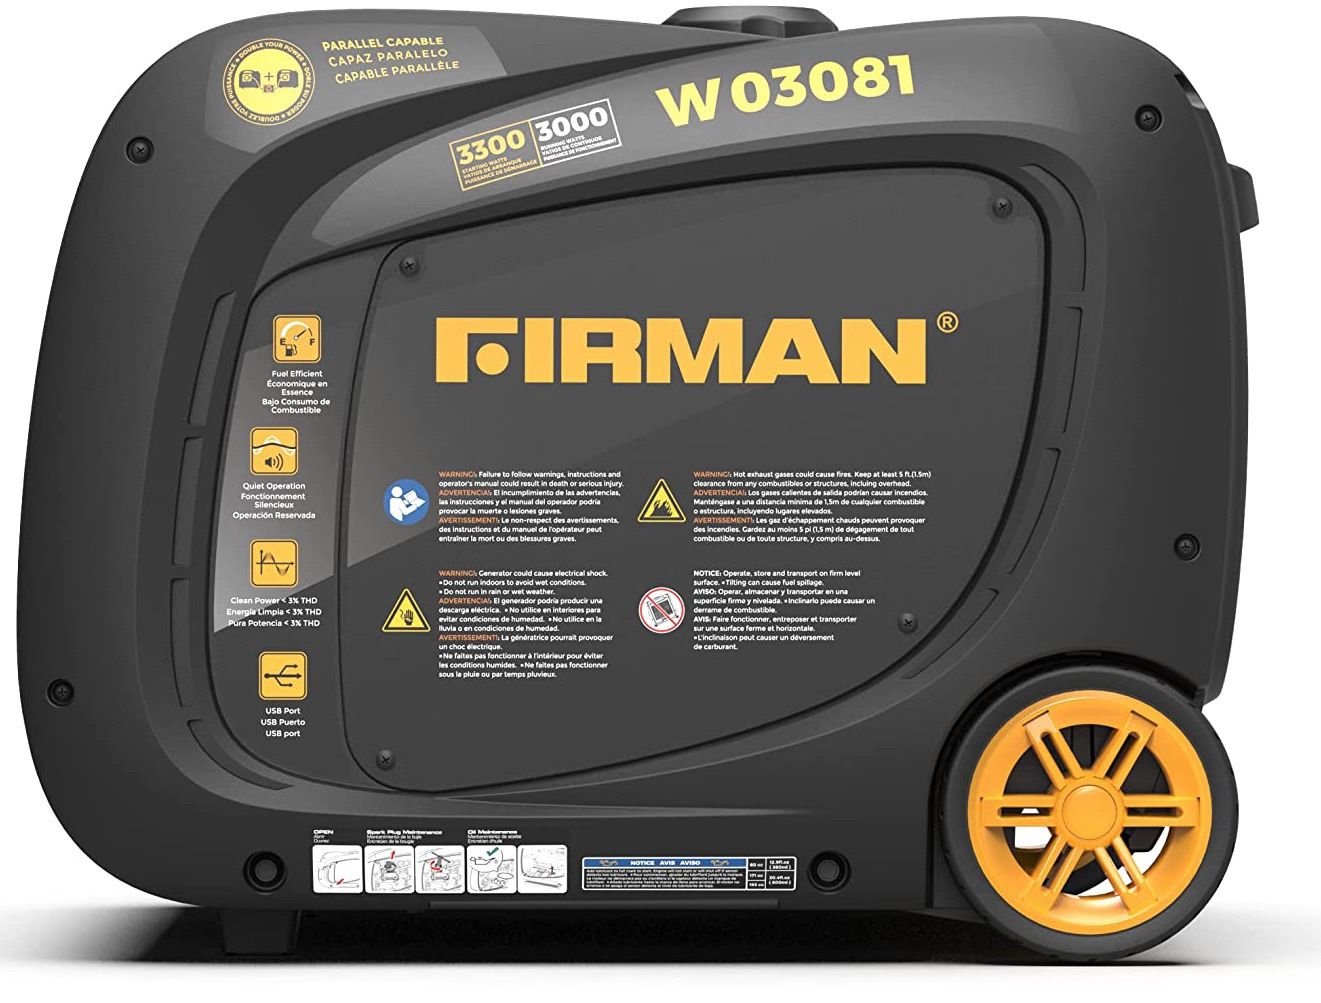 New Firman W03081 3300/3000 Watt Recoil Start Gas Portable Generator  Product details The Firman W03081 Inverter generator features 3300 starting watt